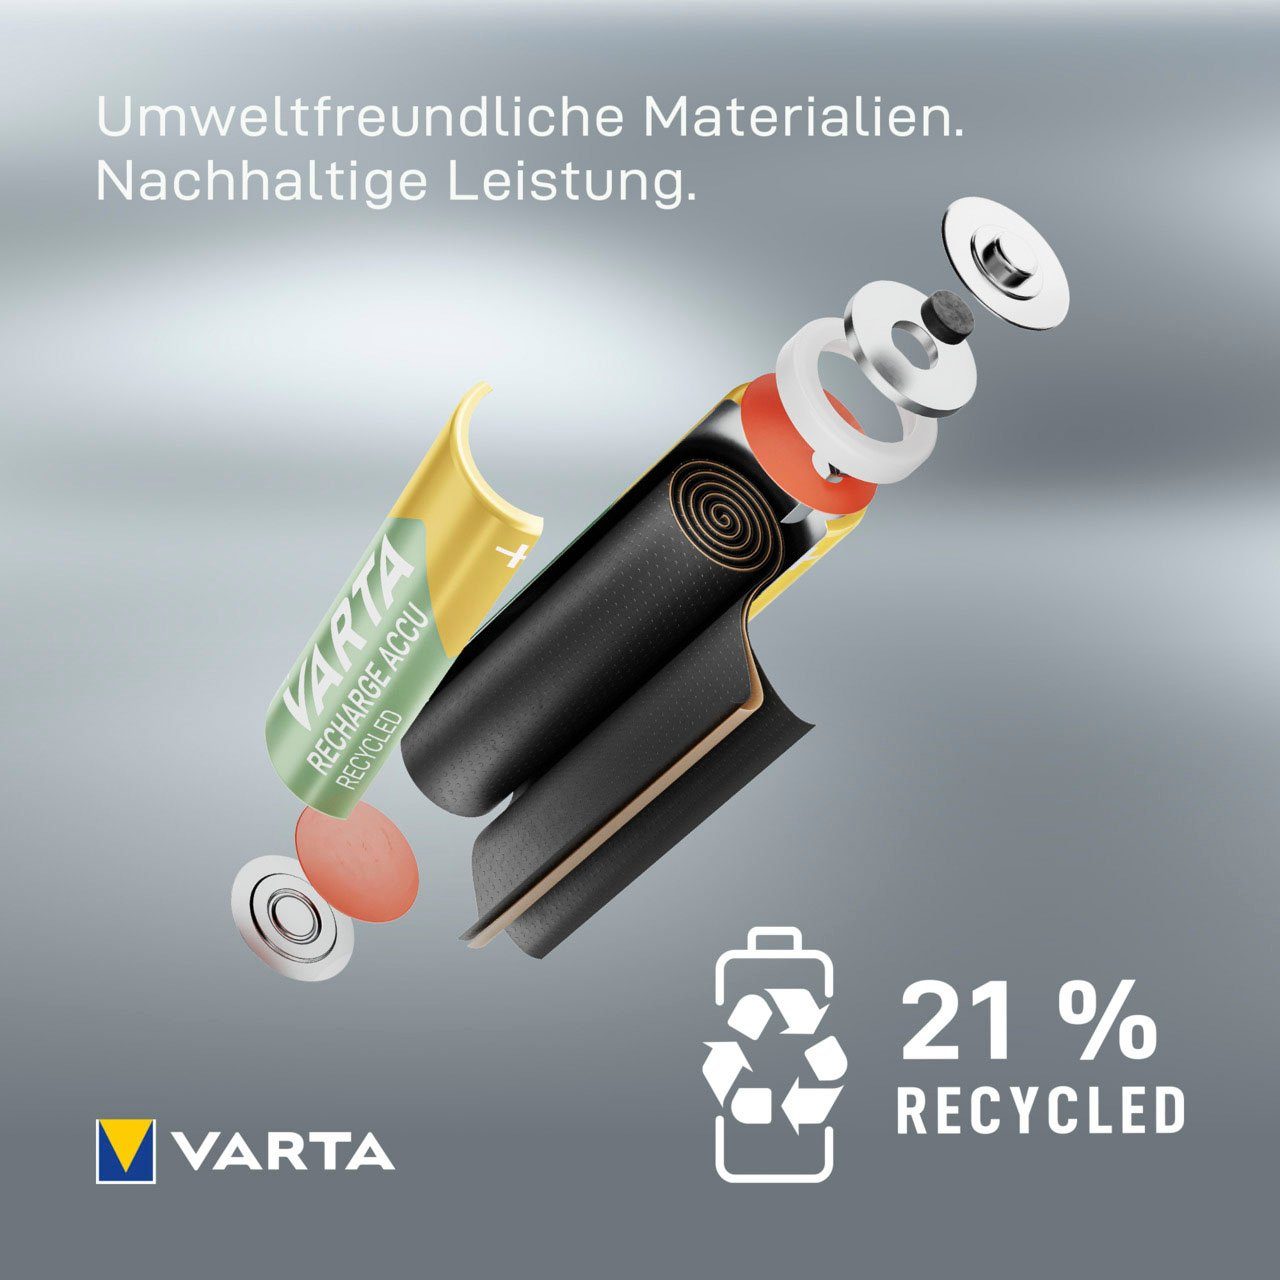 VARTA wiederauflaudbare Akku V, Micro wiederaufladbar Accu mAh Recharge Akkus Recycled 800 VARTA (1,2 St), 4